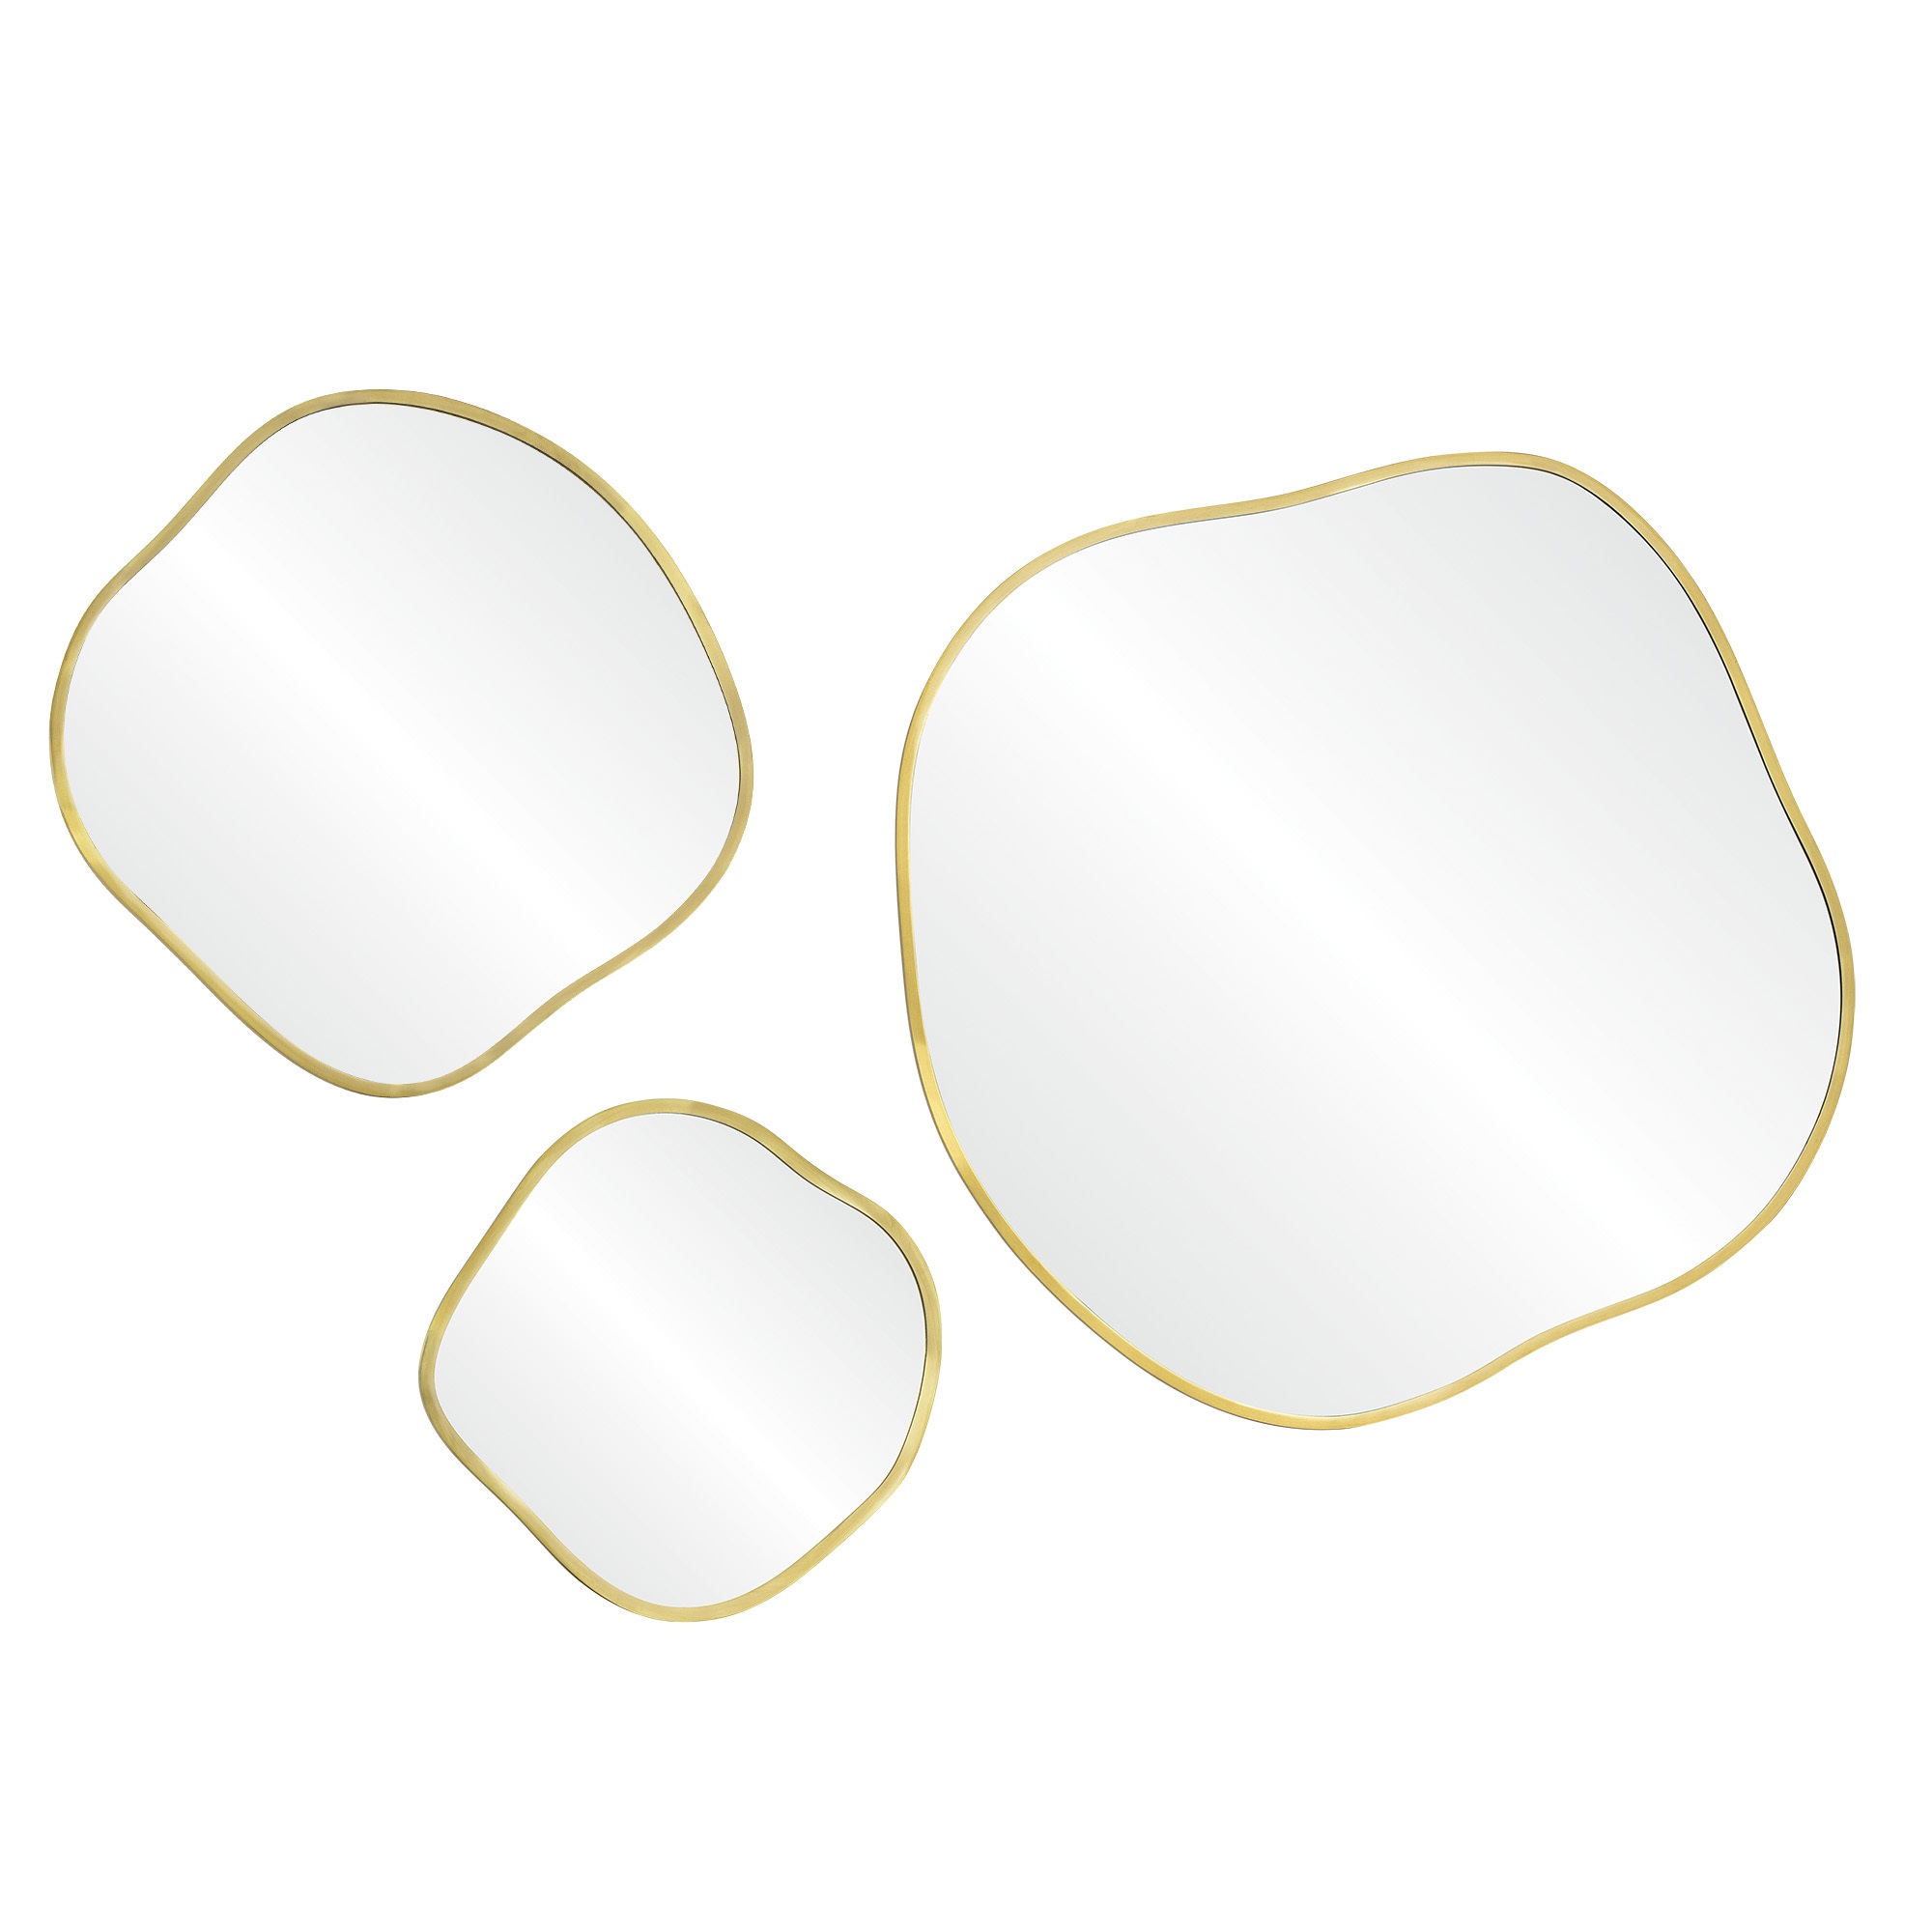 Organic Panno Gold Сет из 3-х зеркал Ø91, Ø61, Ø41 см